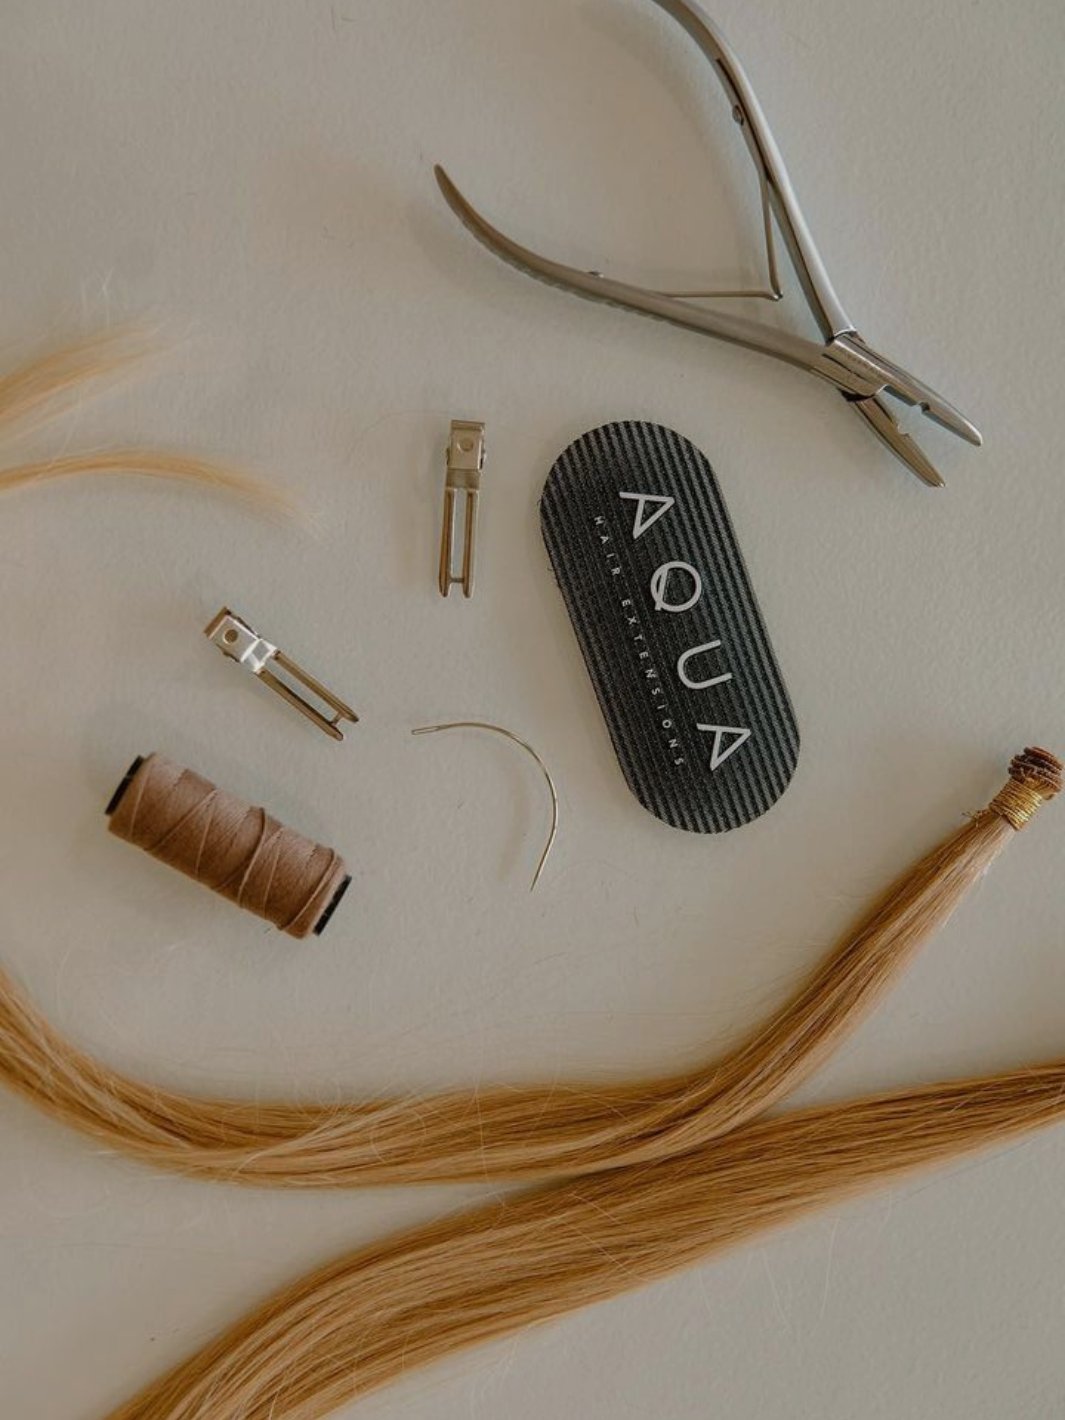 Small Scissors by Aqua Hair Extensions